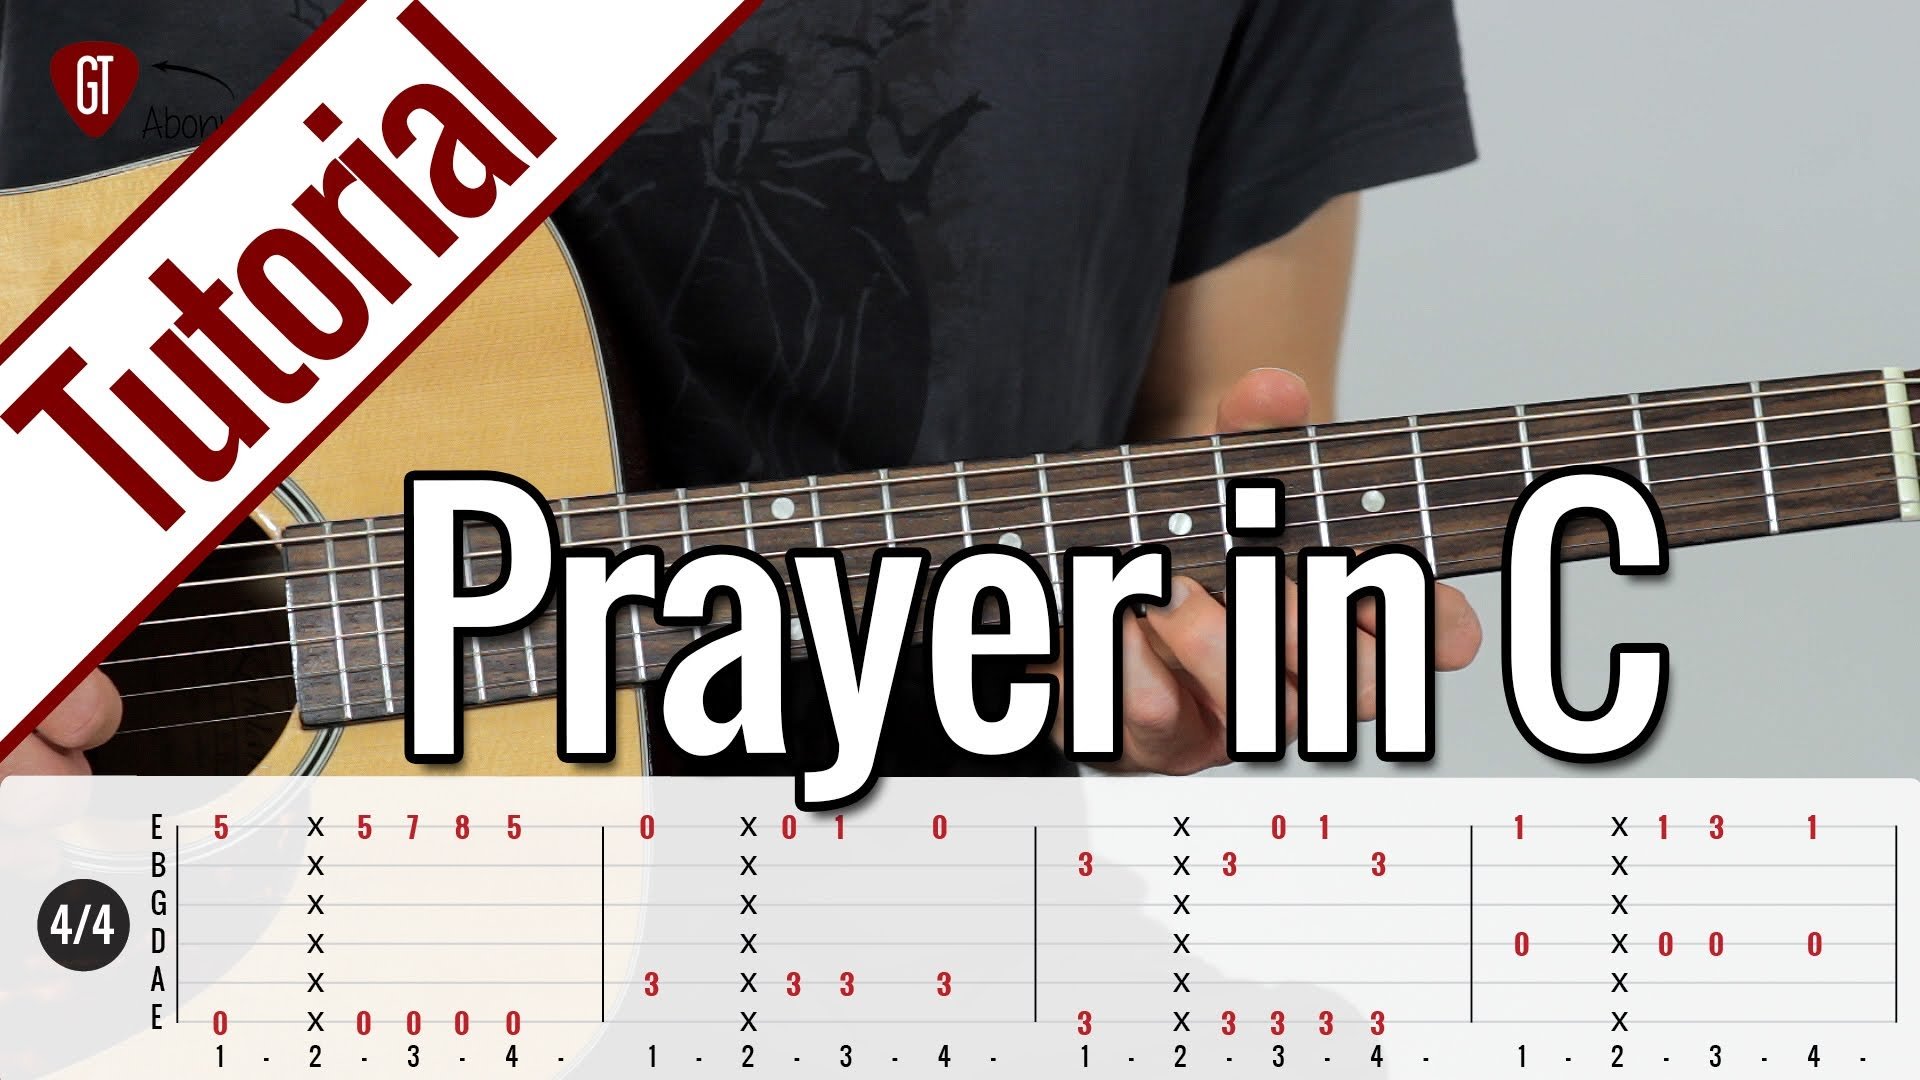 Prayer in c на гитаре. Player c на гитаре. Prayer in c на гитаре табы. Player in c на гитаре табы. Lilly Wood Prayer in c на гитаре.